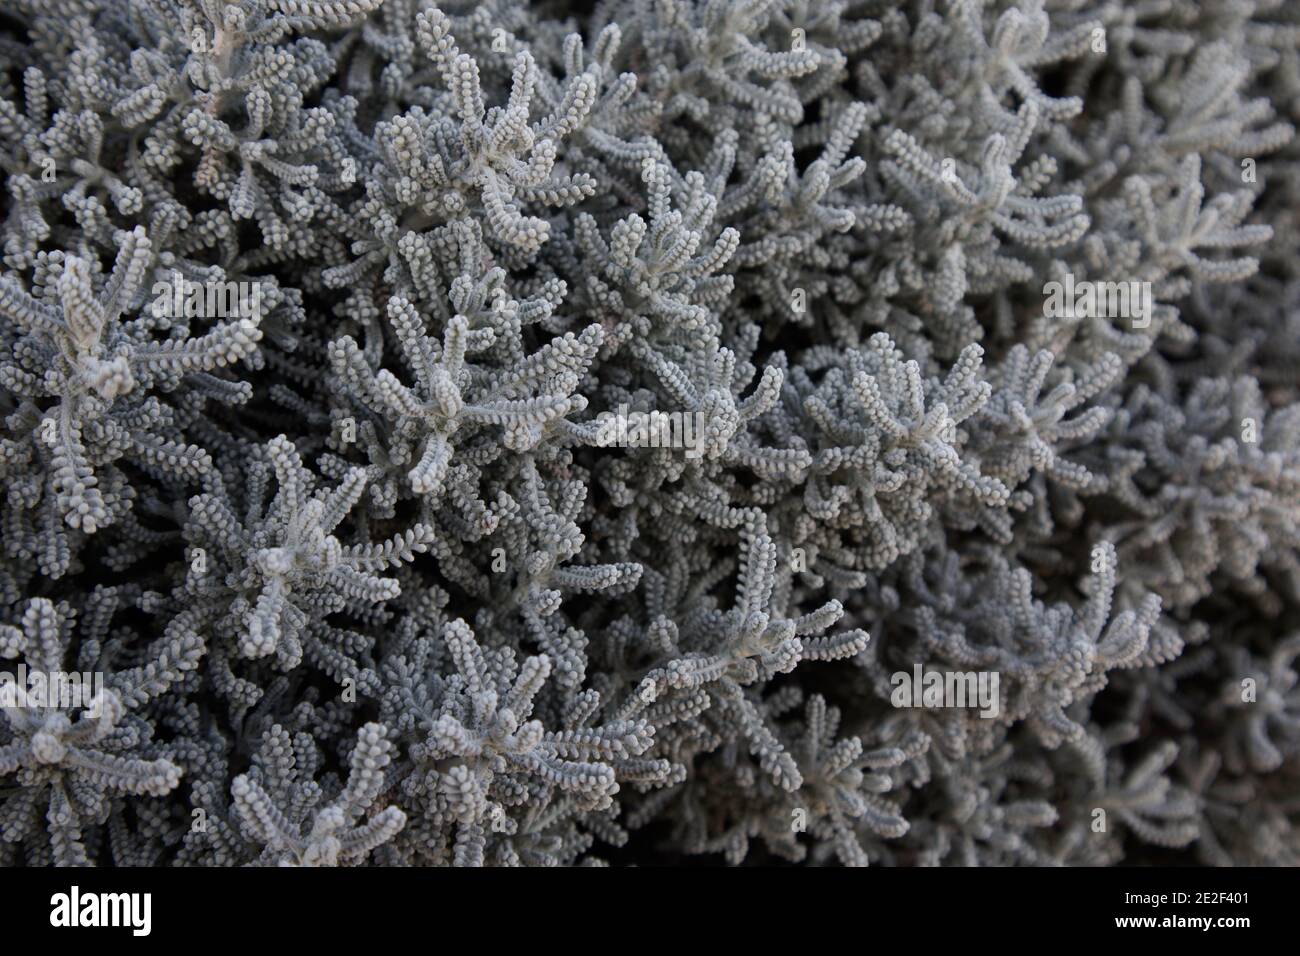 Santolina chamaecyparissus Cotton lavender – woolly-like dense grey leaves,  January, England, UK Stock Photo